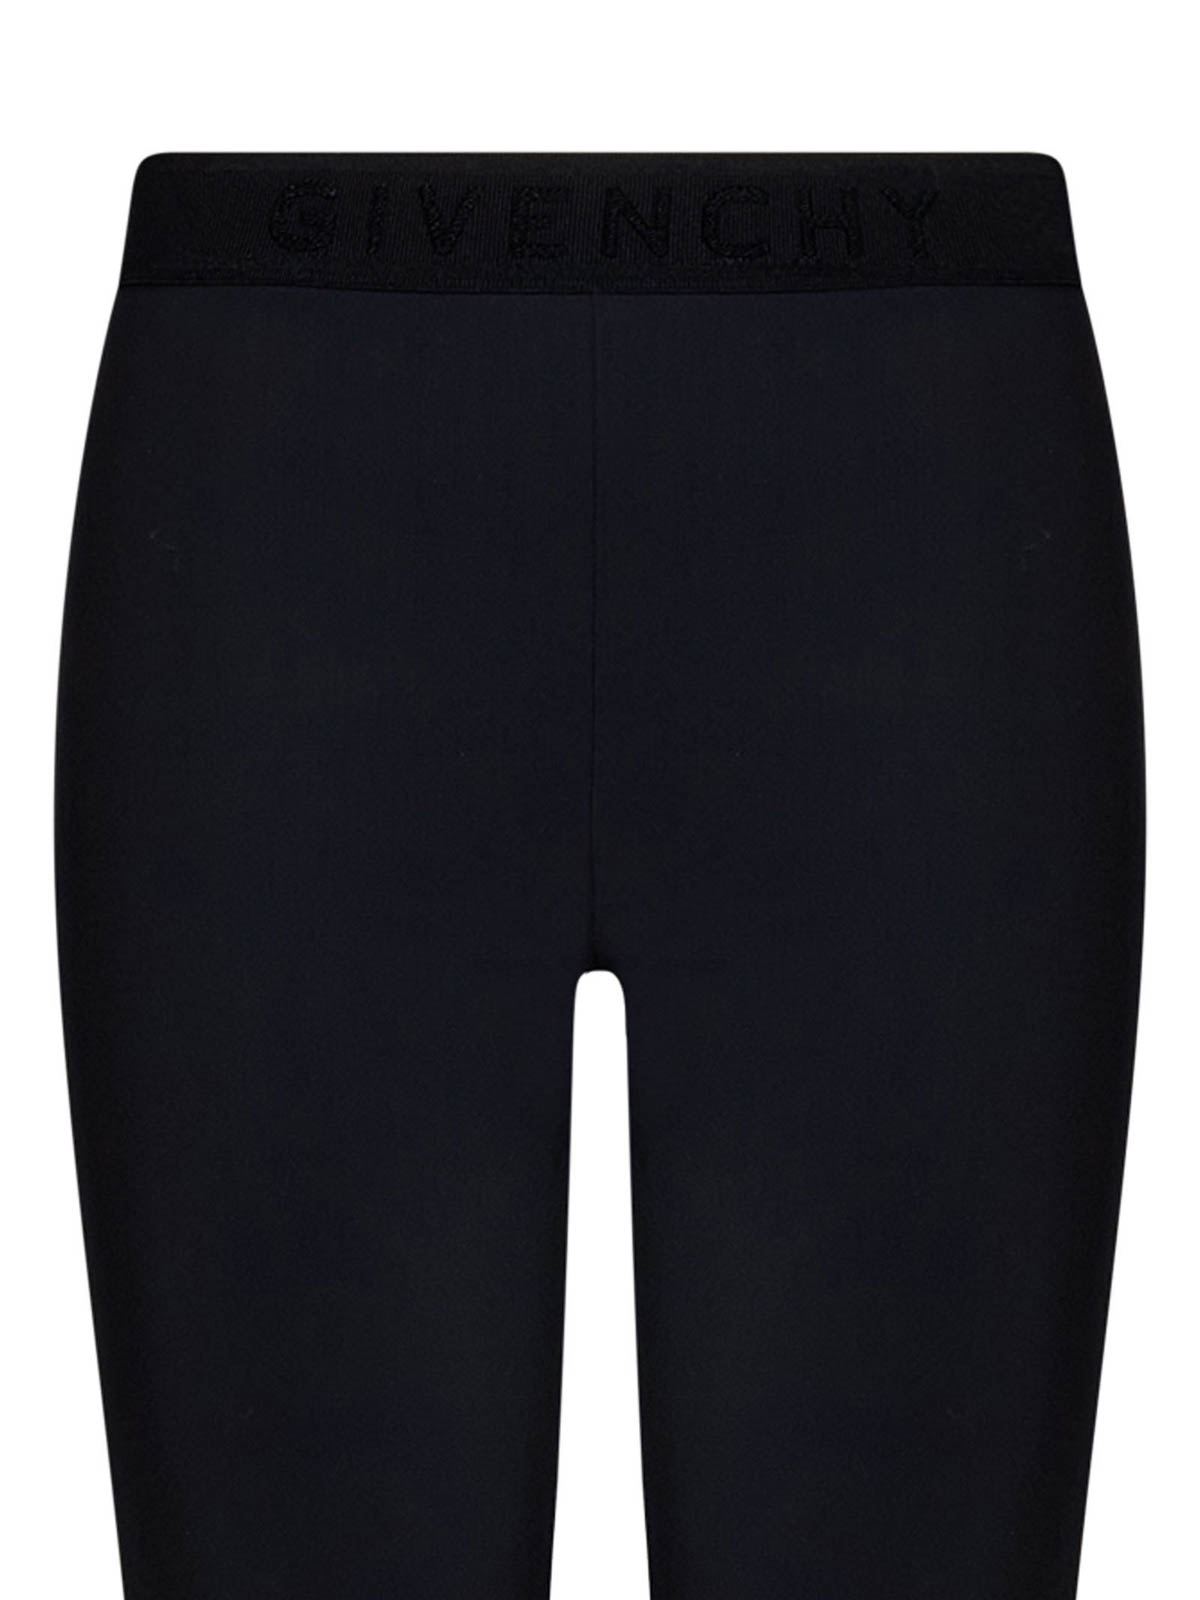 Givenchy black stretchy leggings with logo band - BOPF